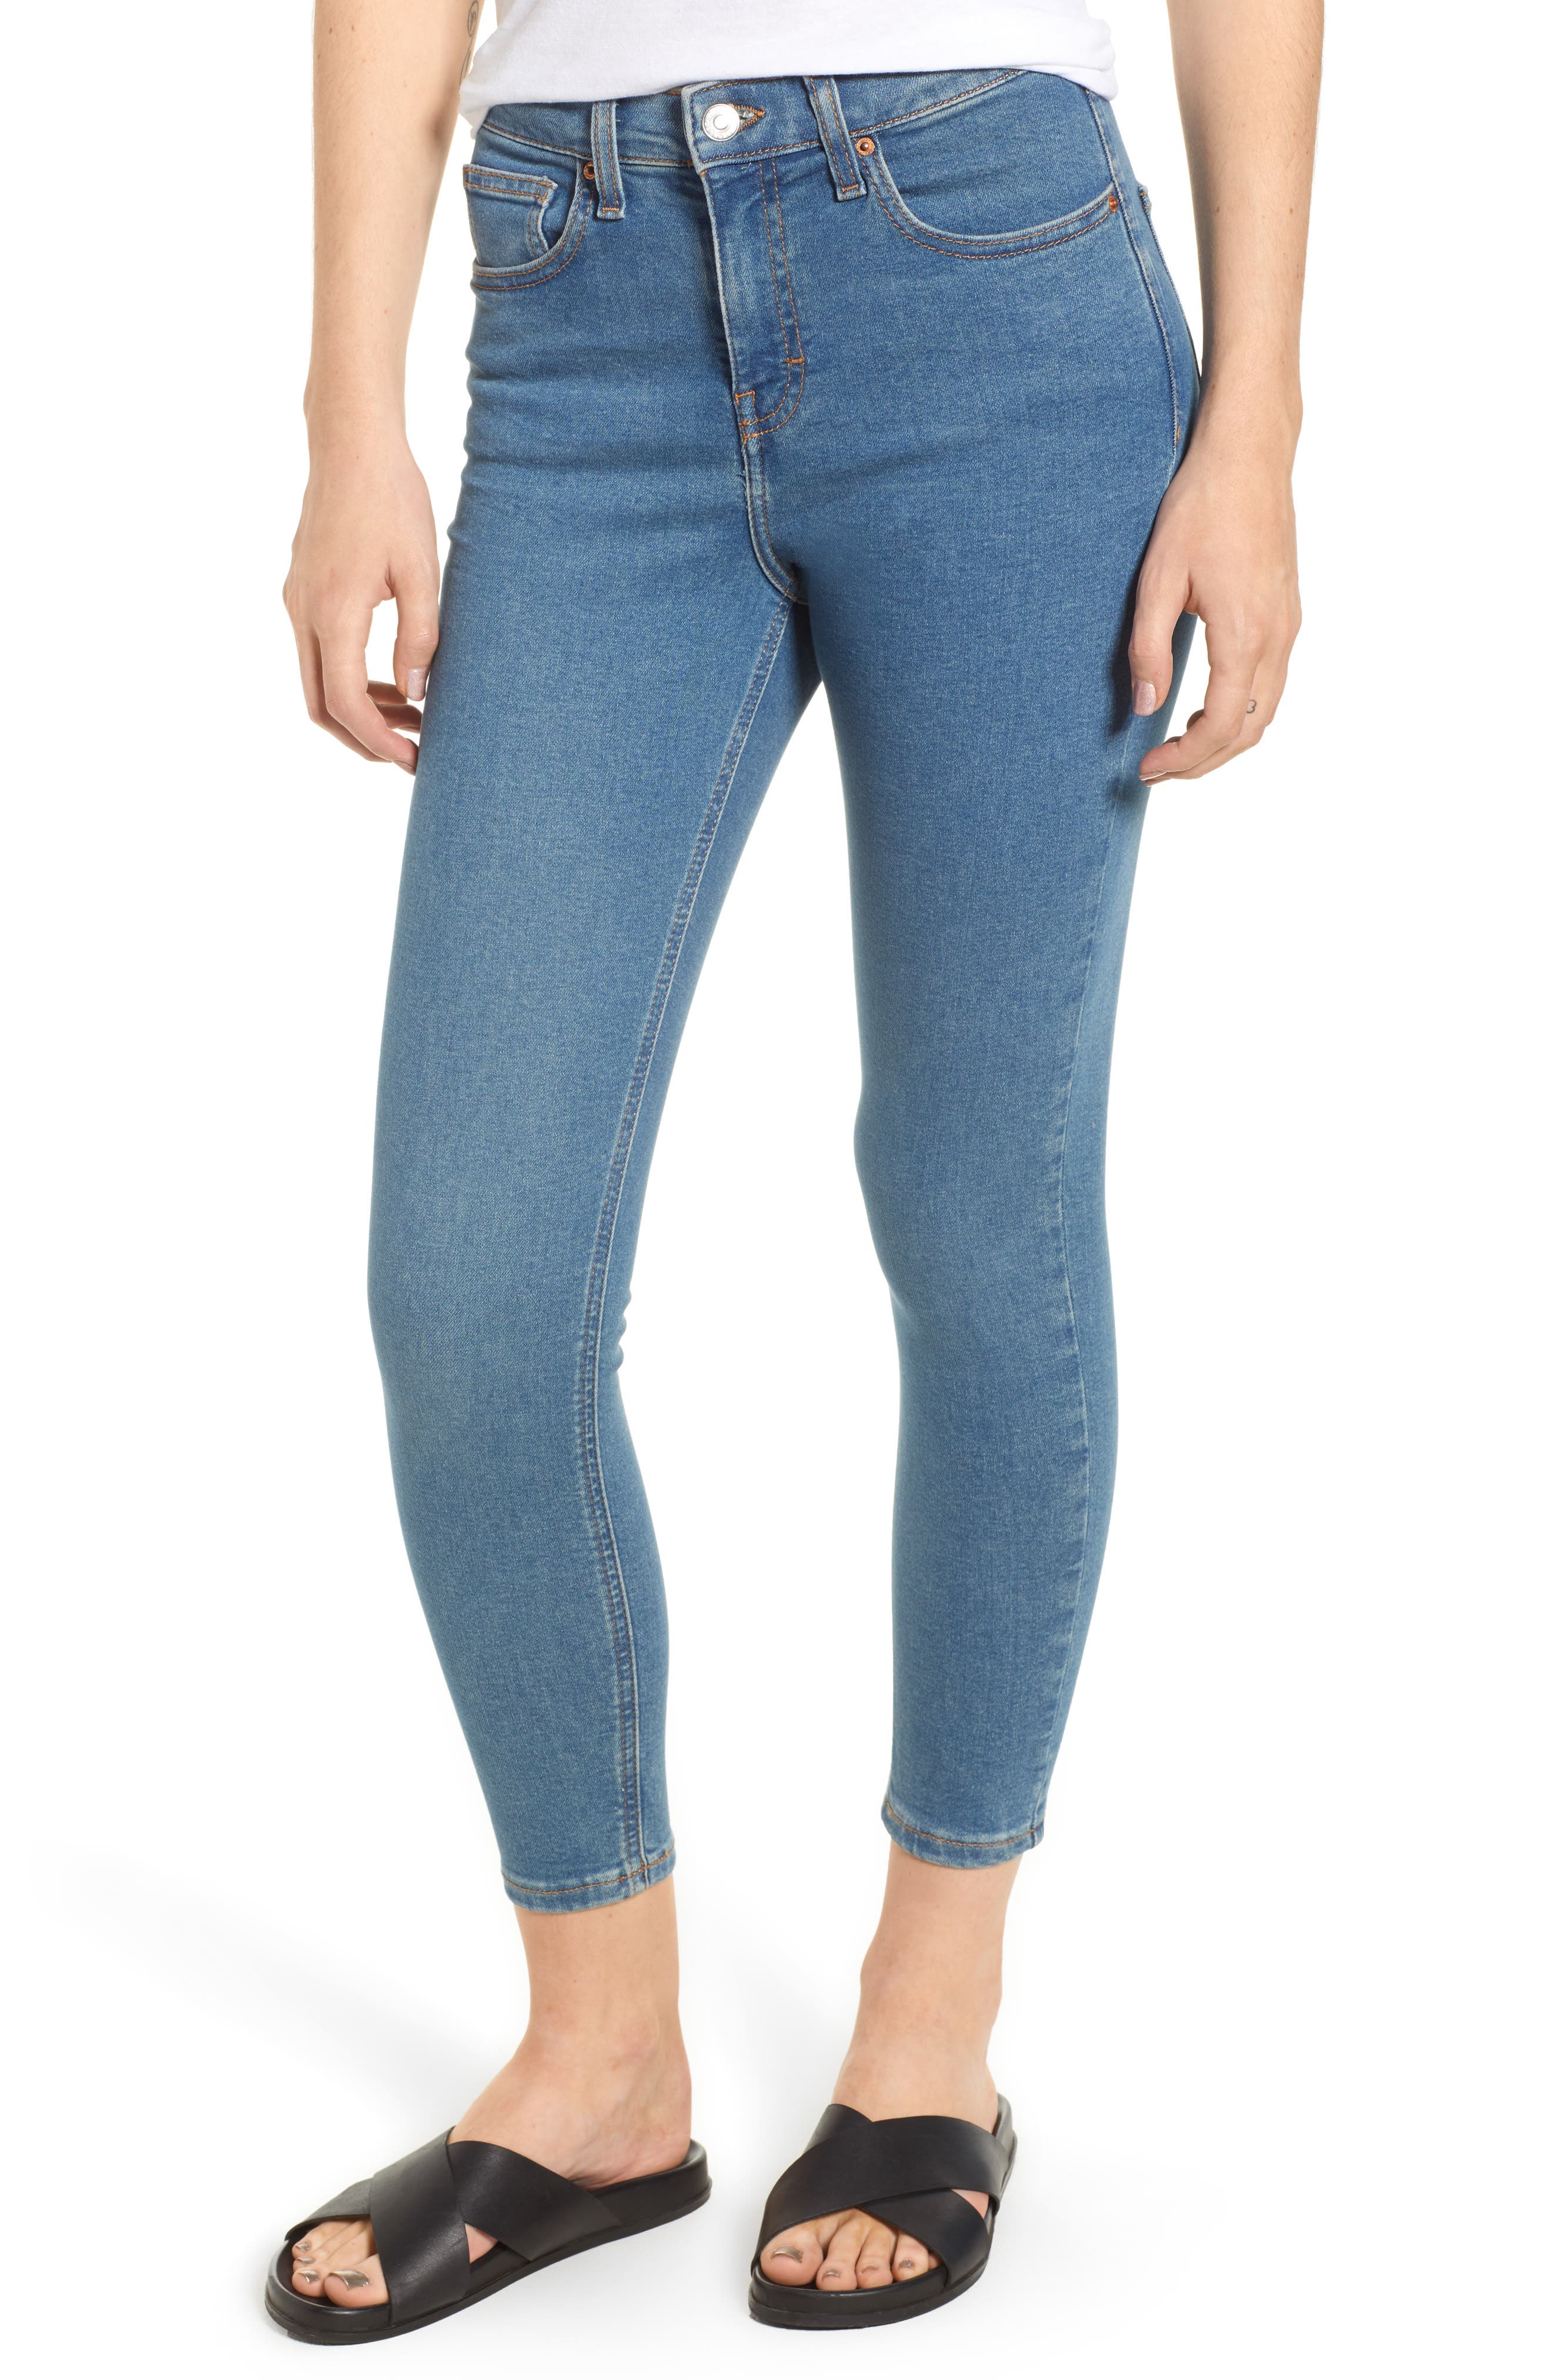 jamie jeans topshop canada